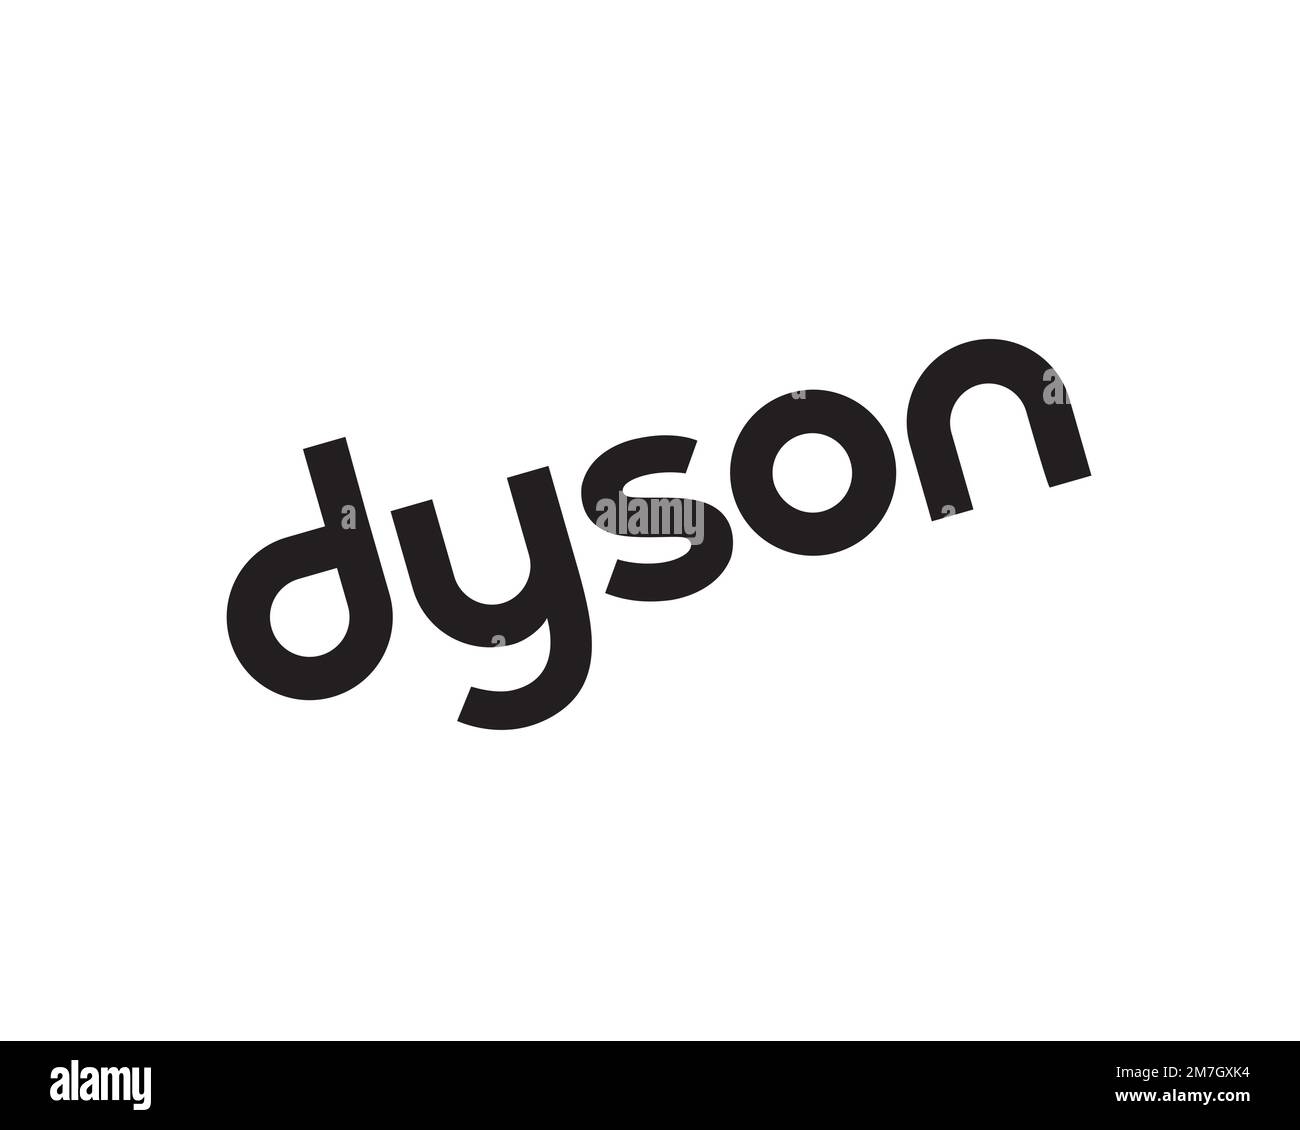 Dyson company, rotated logo, white background Stock Photo